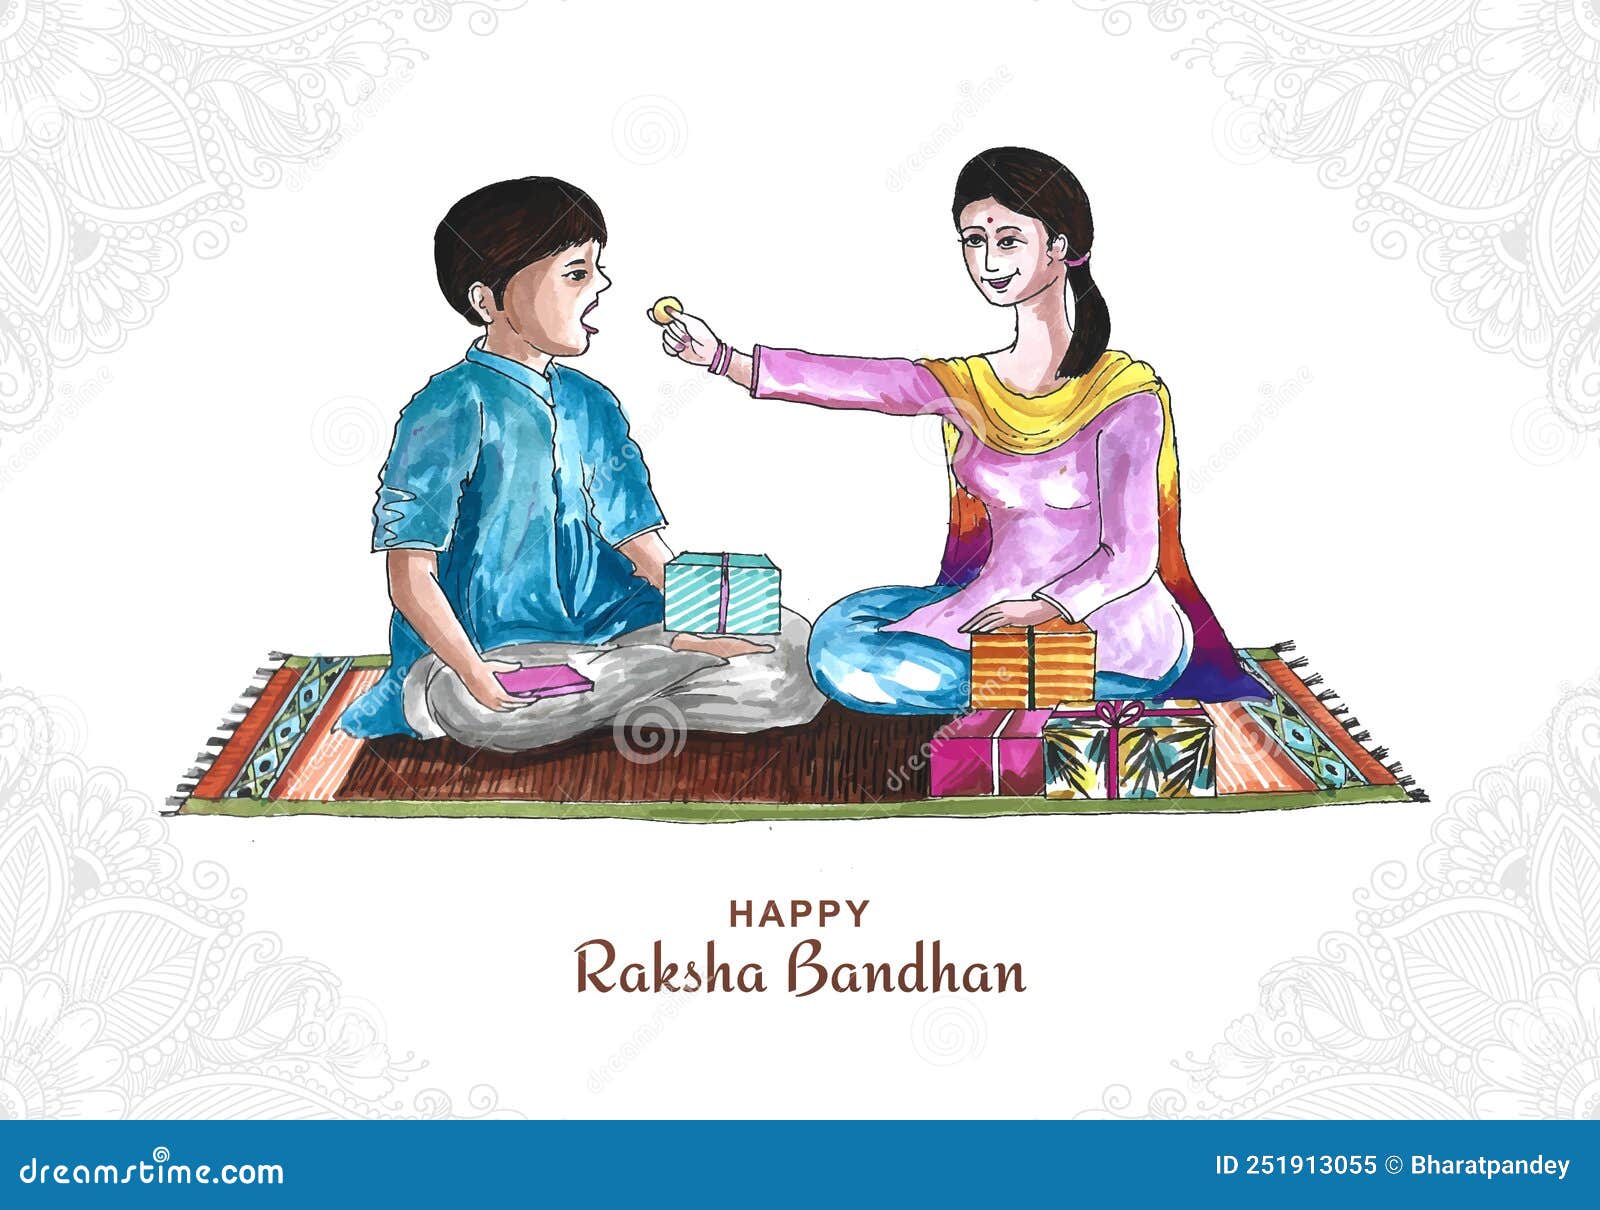 How to Draw Raksha Bandhan Scenery | Raksha bandhan Drawing for beginners -  YouTube